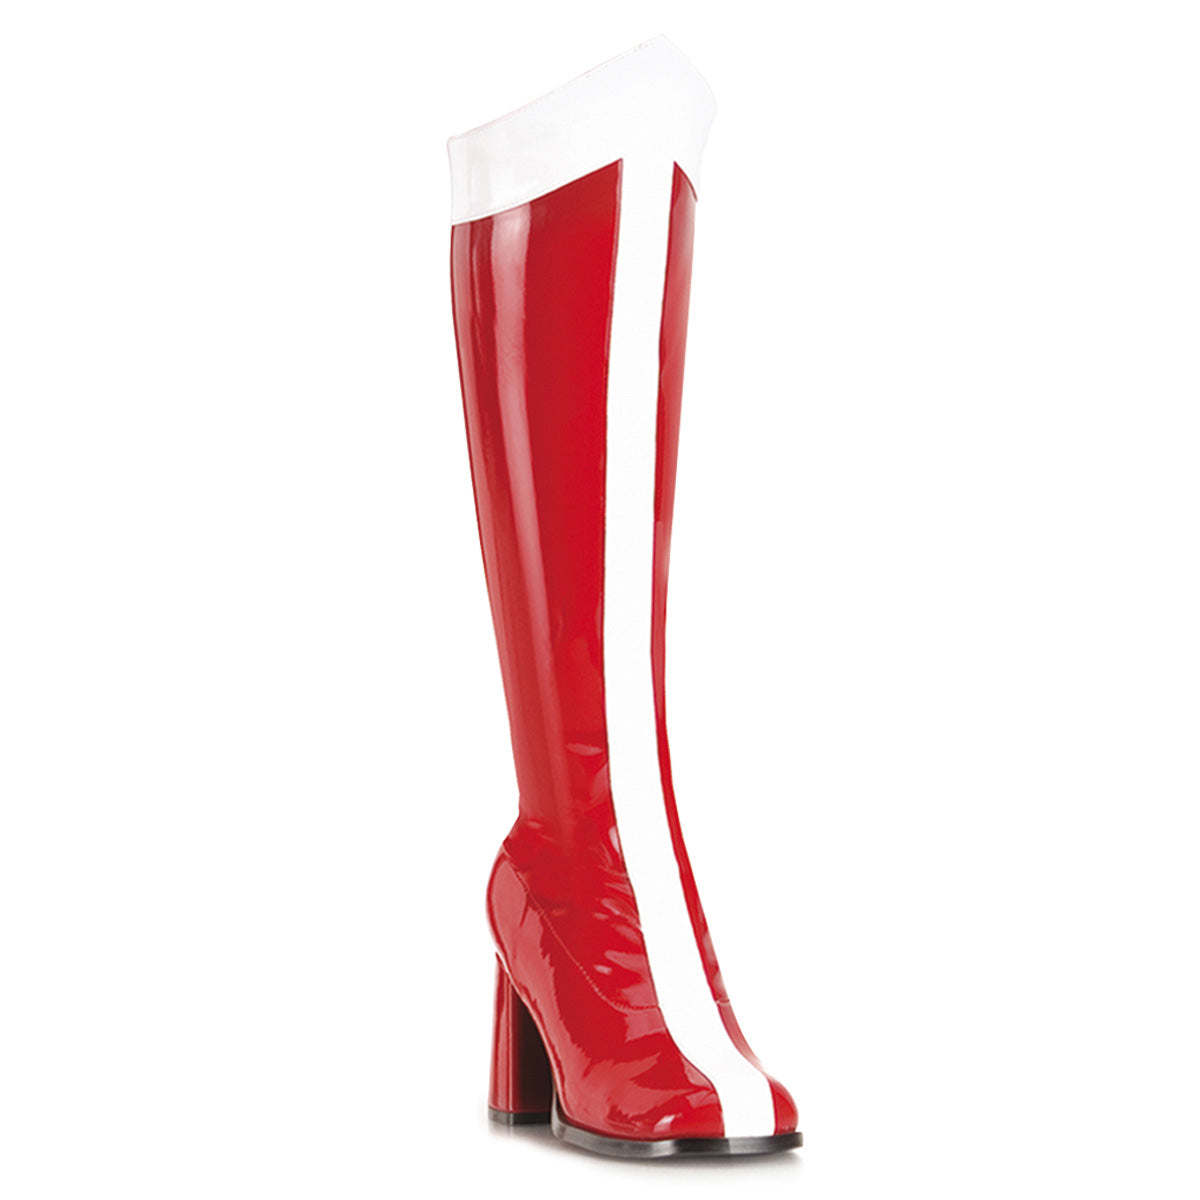 GOGO-305 Pleasers Funtasma 3 Inch Heel Red Women's Boots